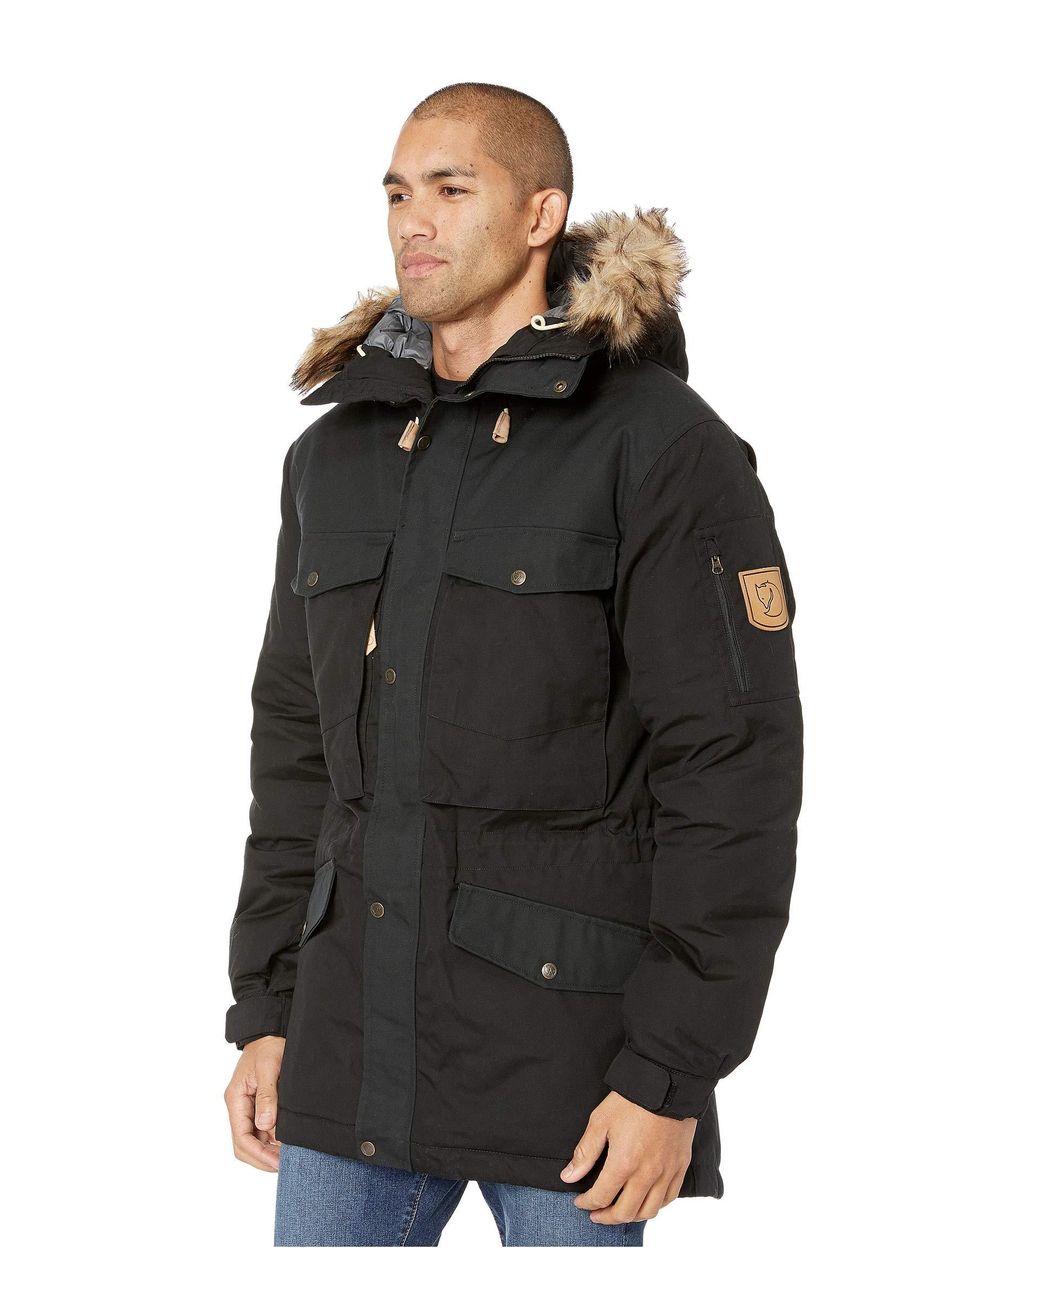 Singi Winter Jacket Fjallraven Online Sale, UP TO 66% OFF